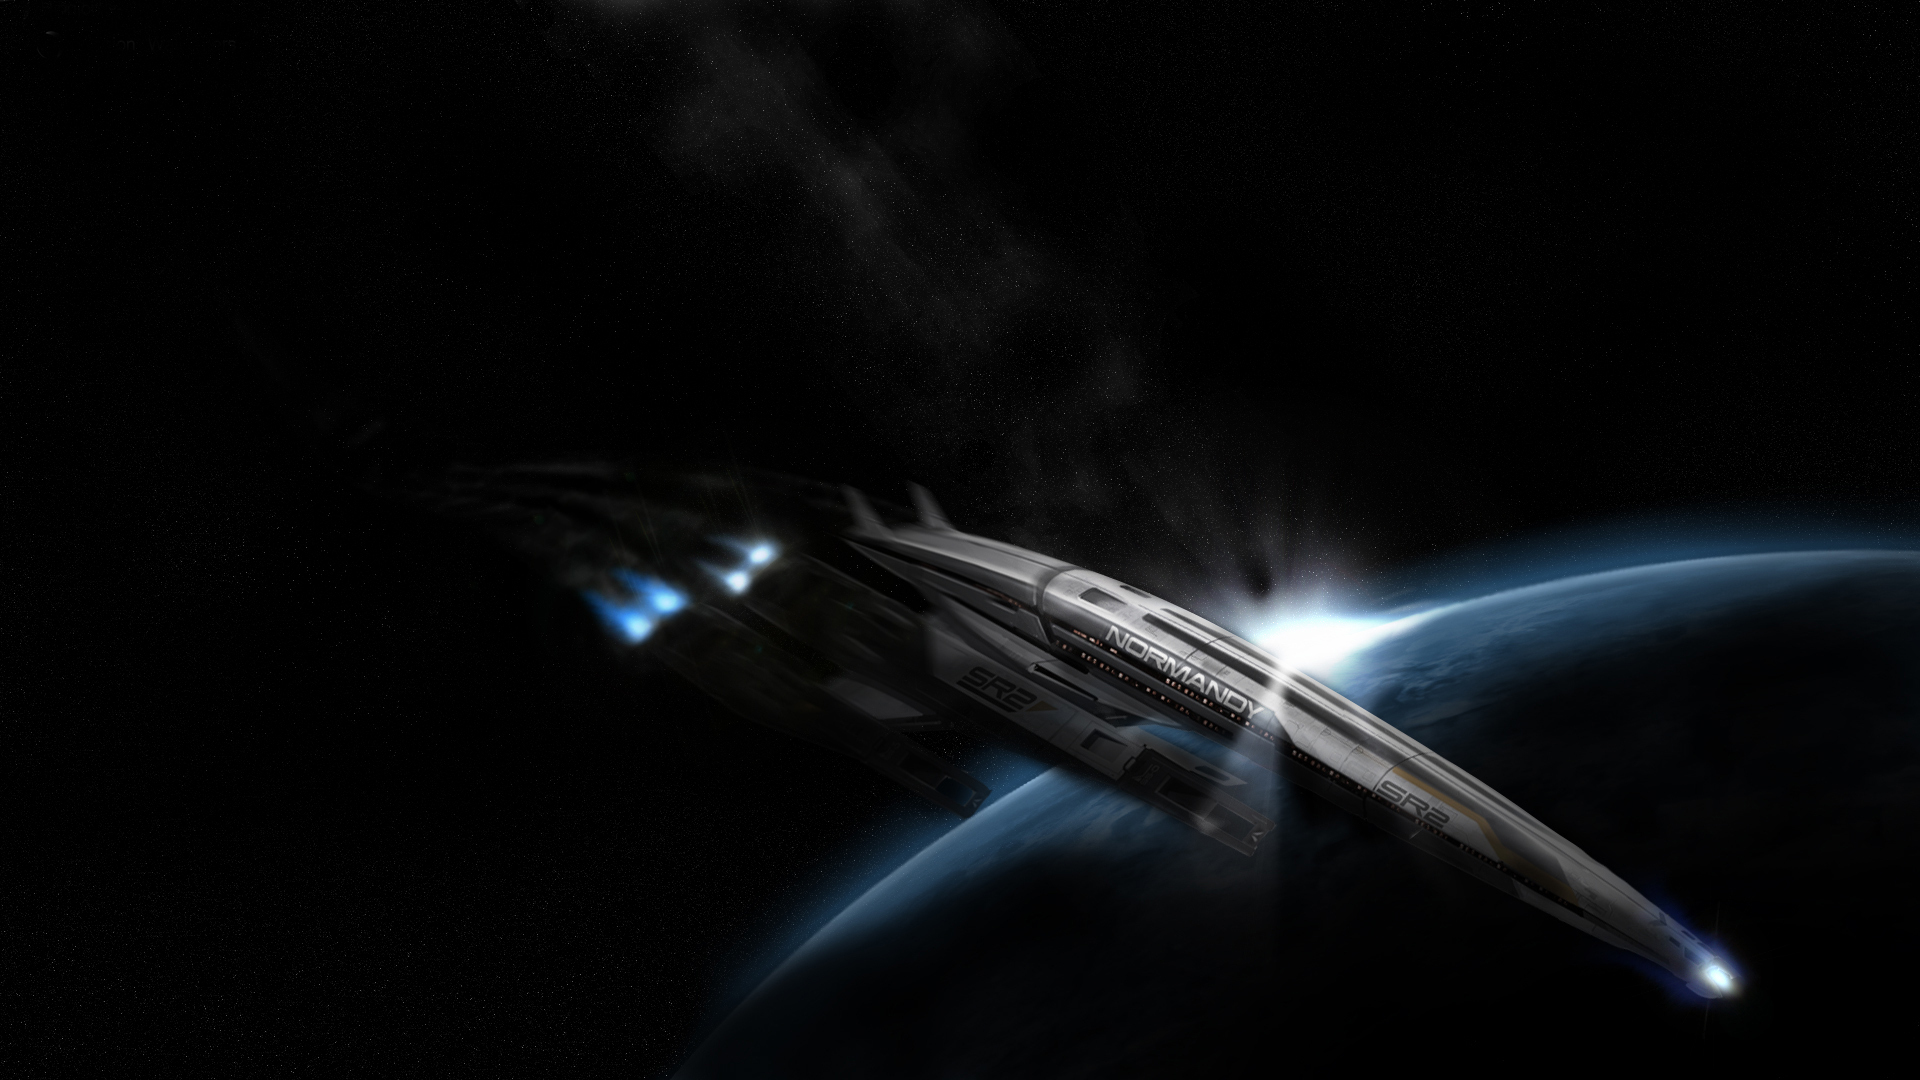 Mass Effect 2 Hd Wallpaper Background Image 1920x1080 